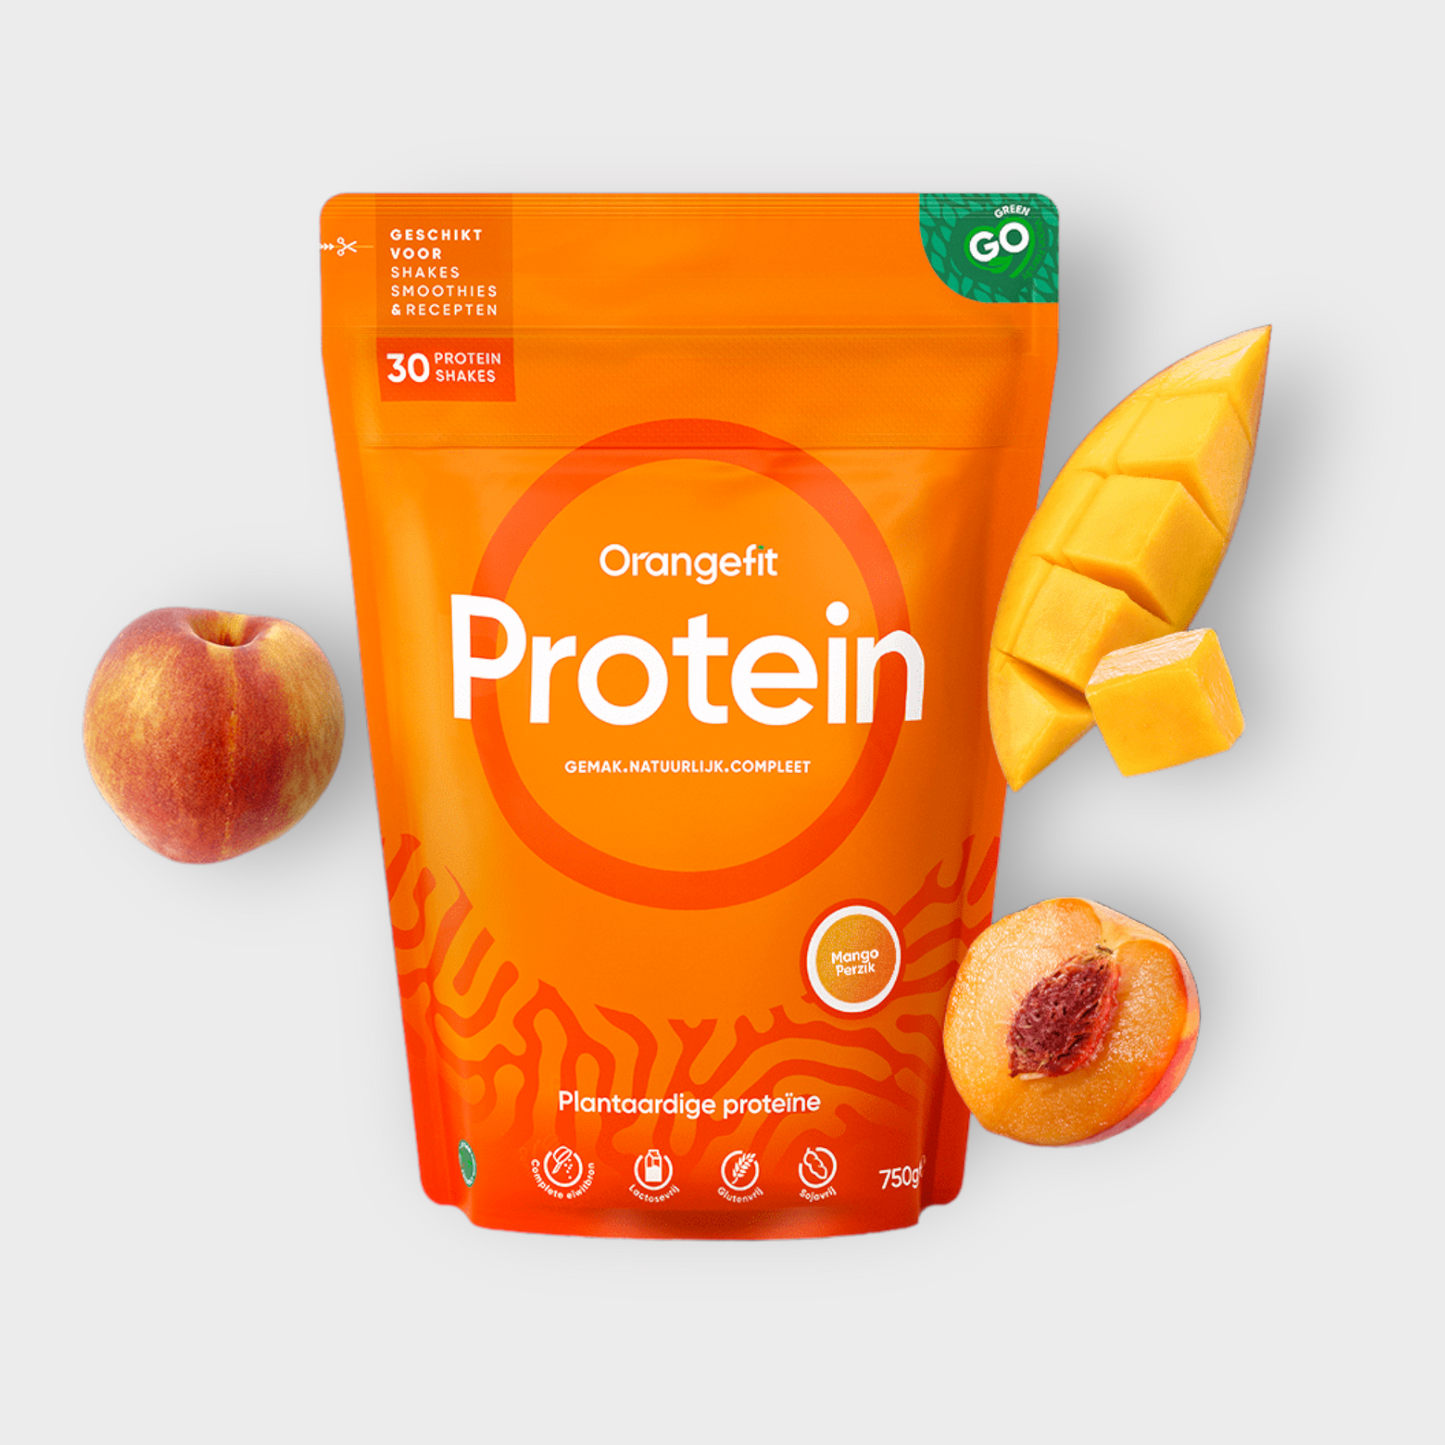 Orangefit Protein (30 shakes)